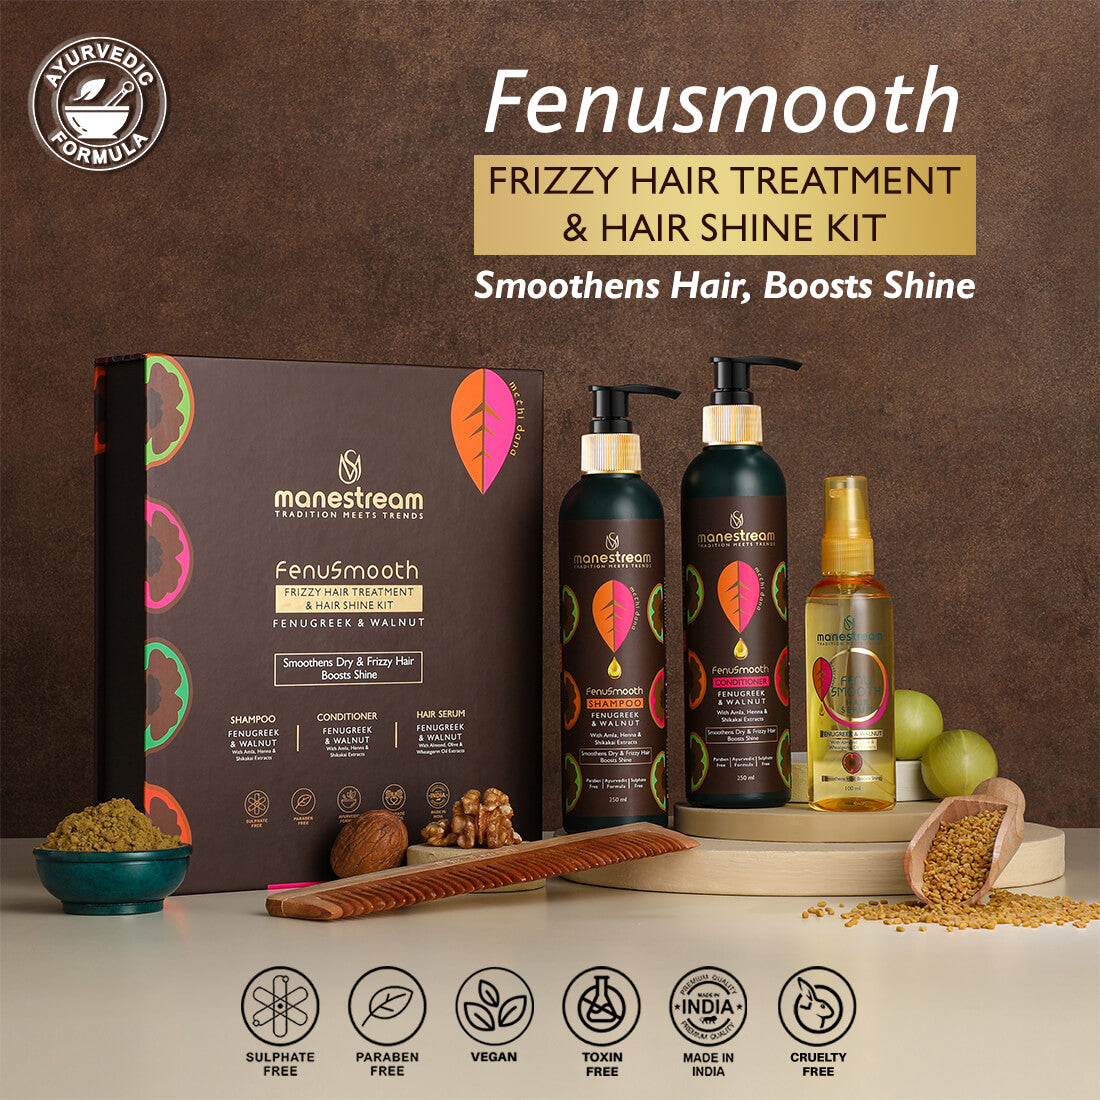 Fenusmooth Frizzy Hair Treatment & Hair Shine Kit